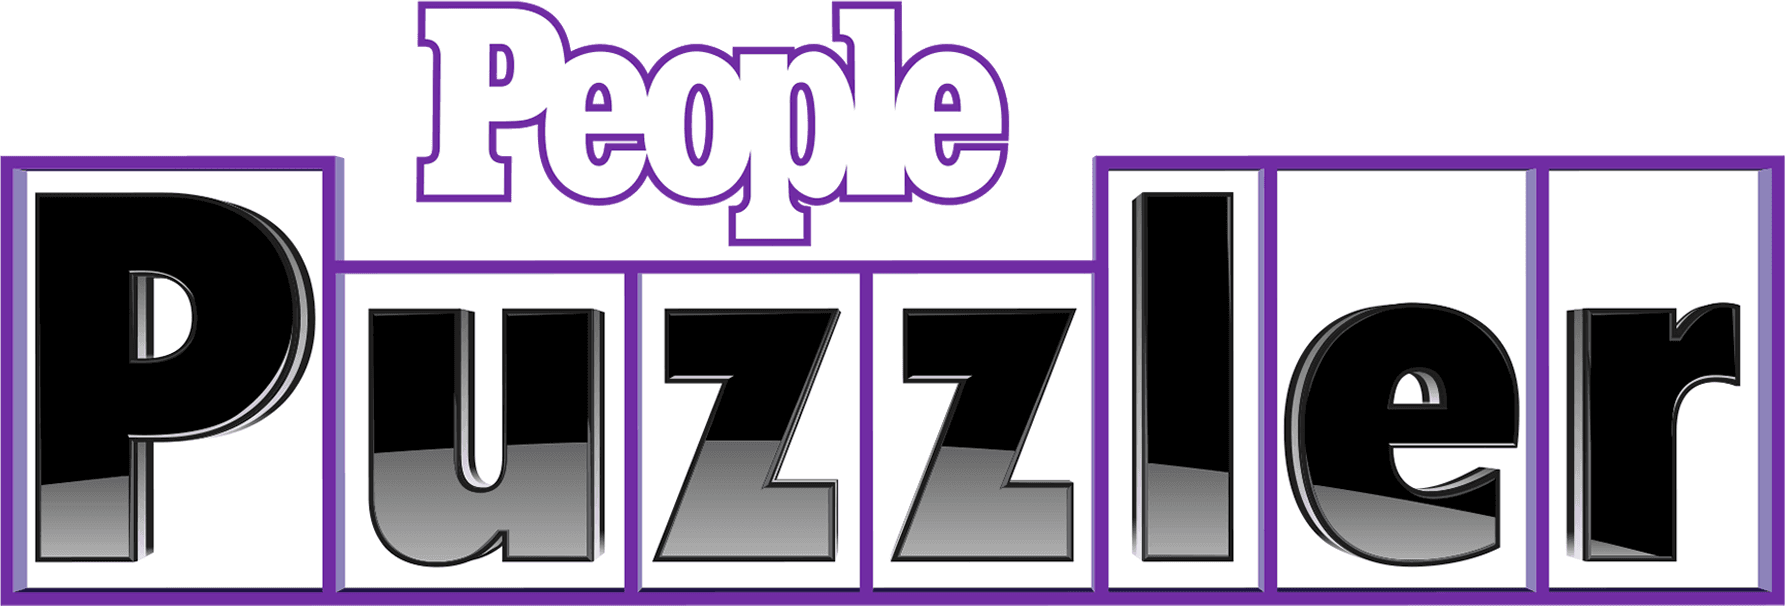 People Puzzler logo